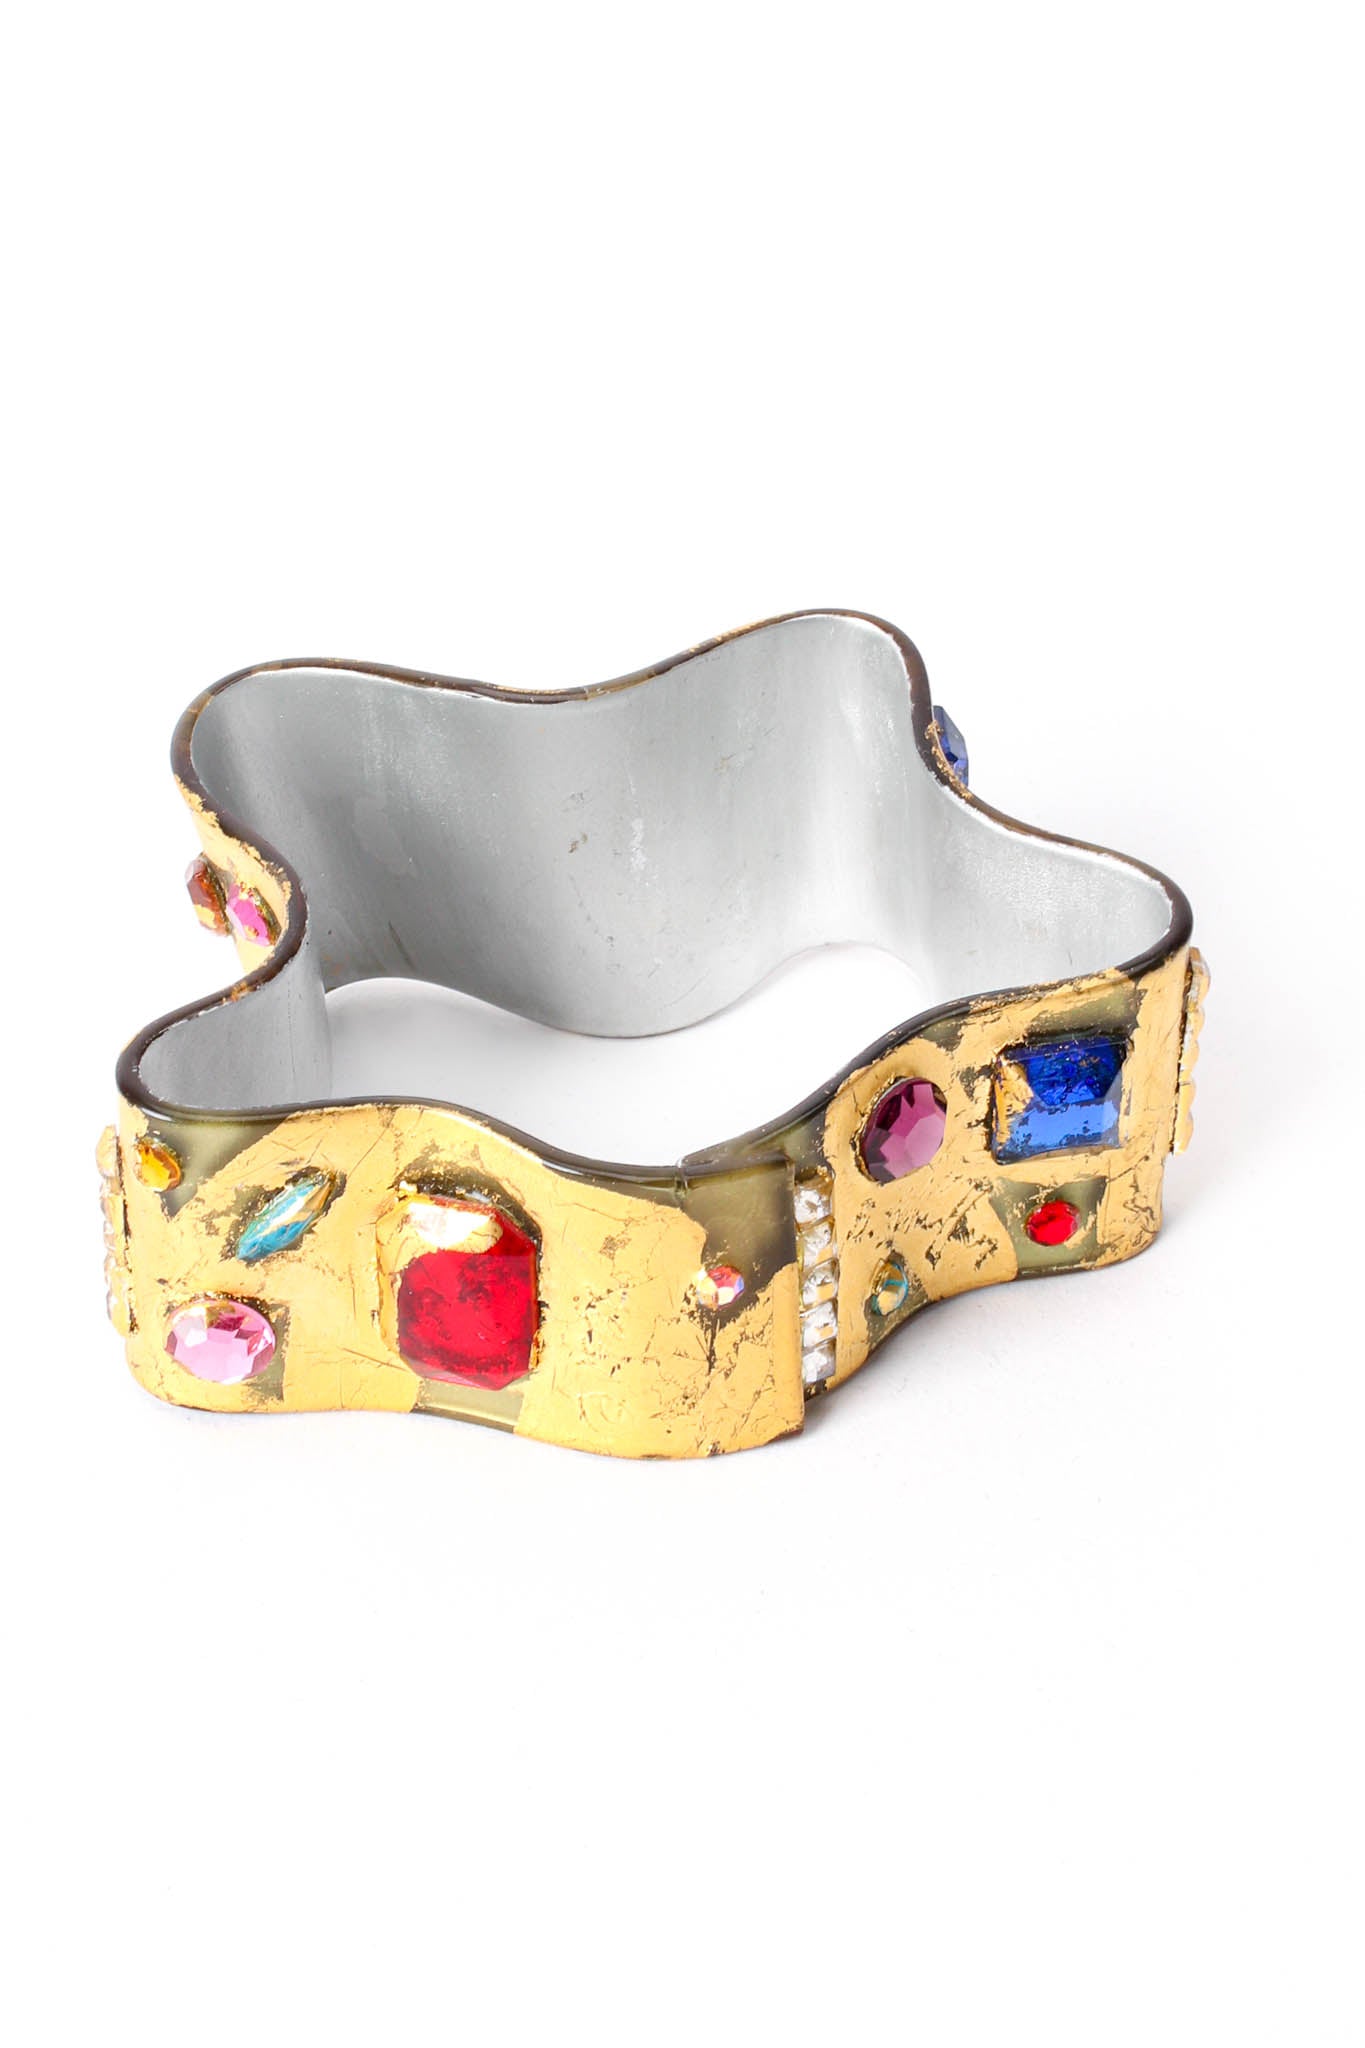 Vintage Bill Schiffer Campy Jeweled Cuff Bracelet details at Recess Los Angeles